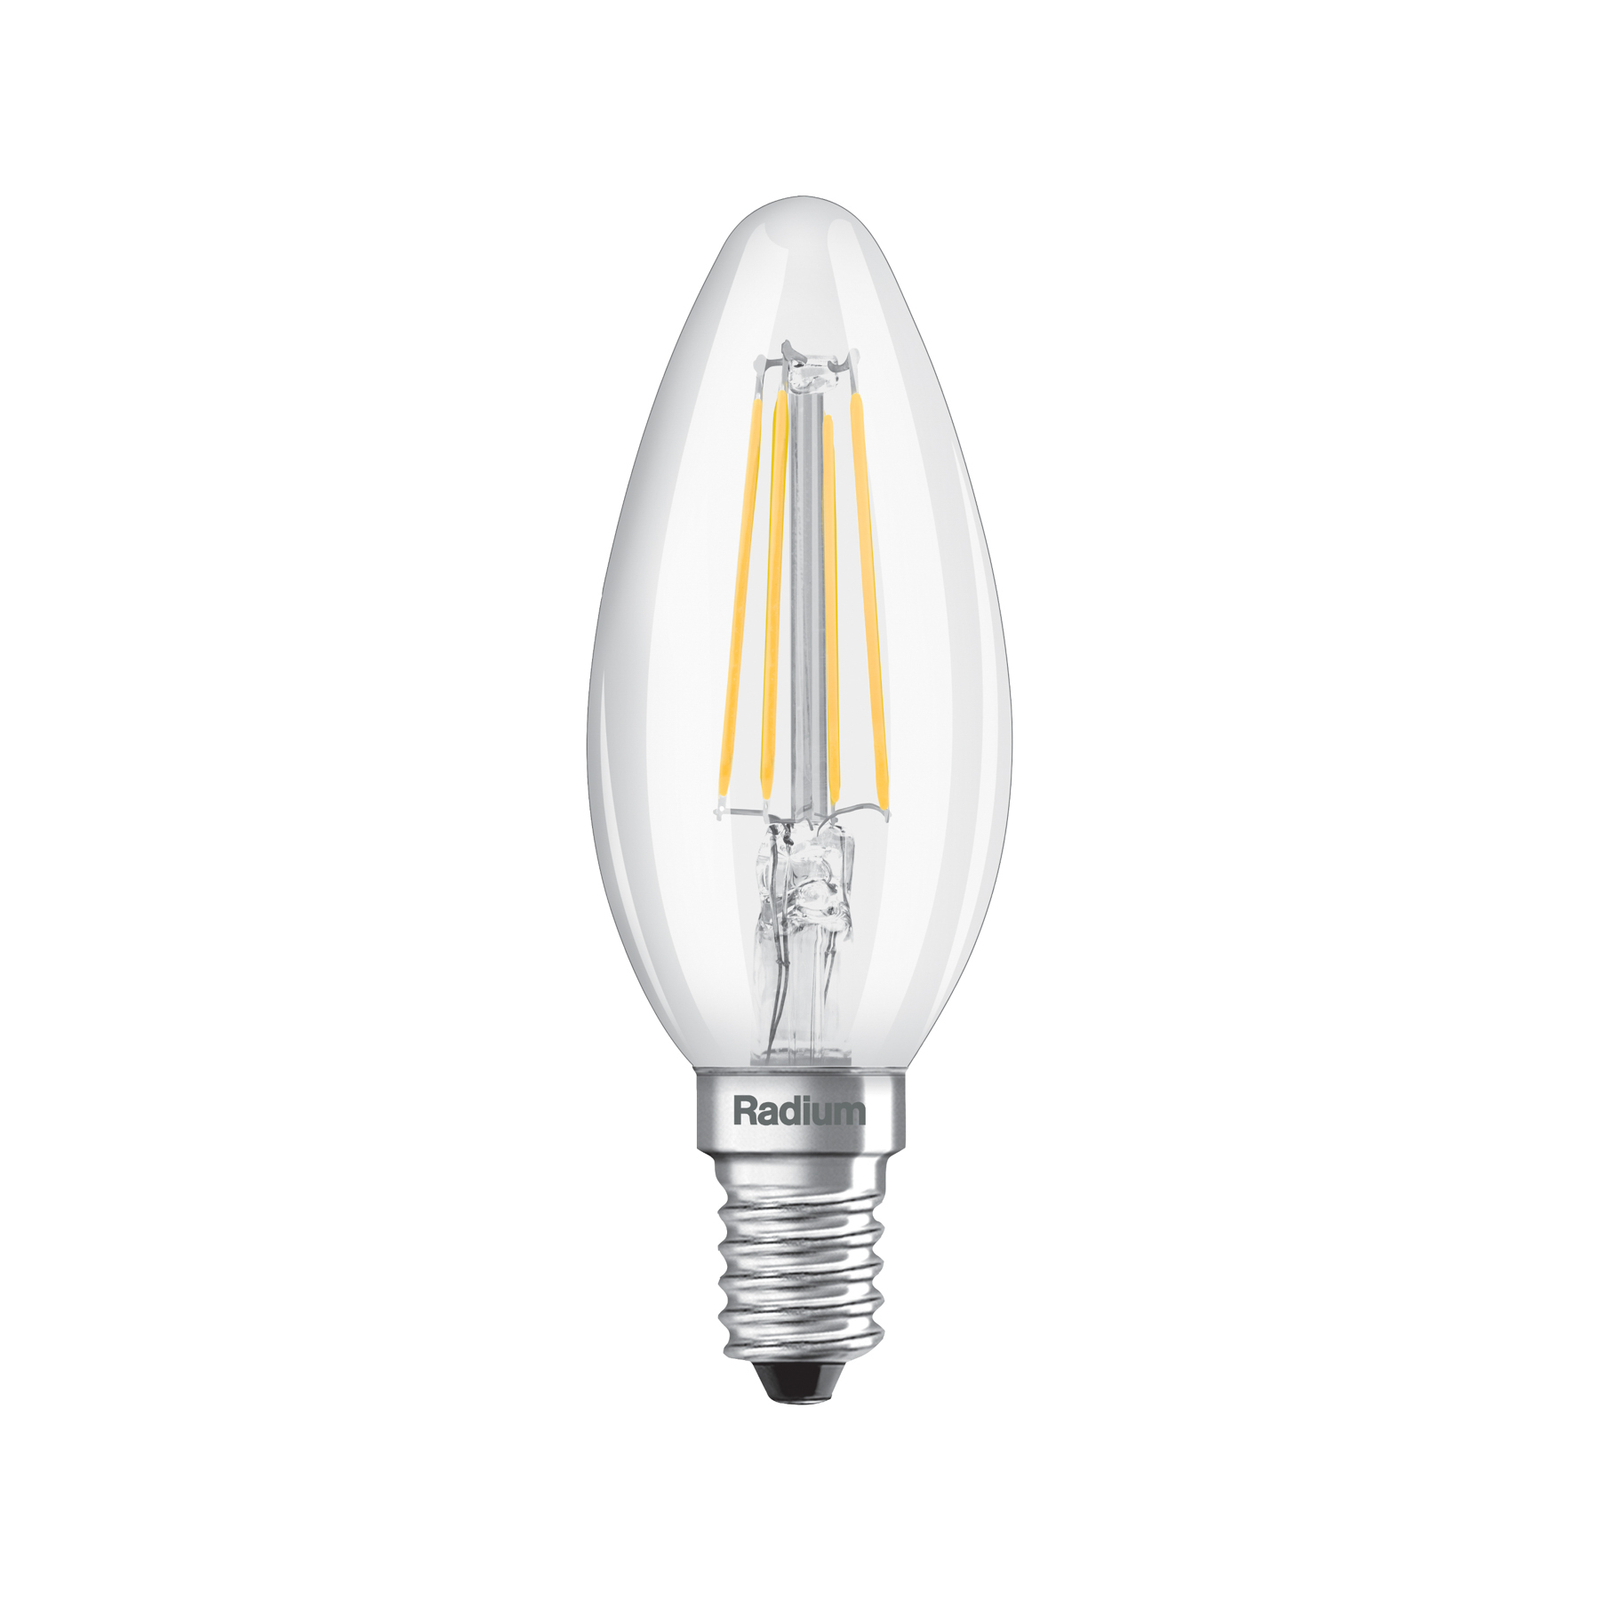 Radium candle LED bulb Essence E14 4W 470lm clear